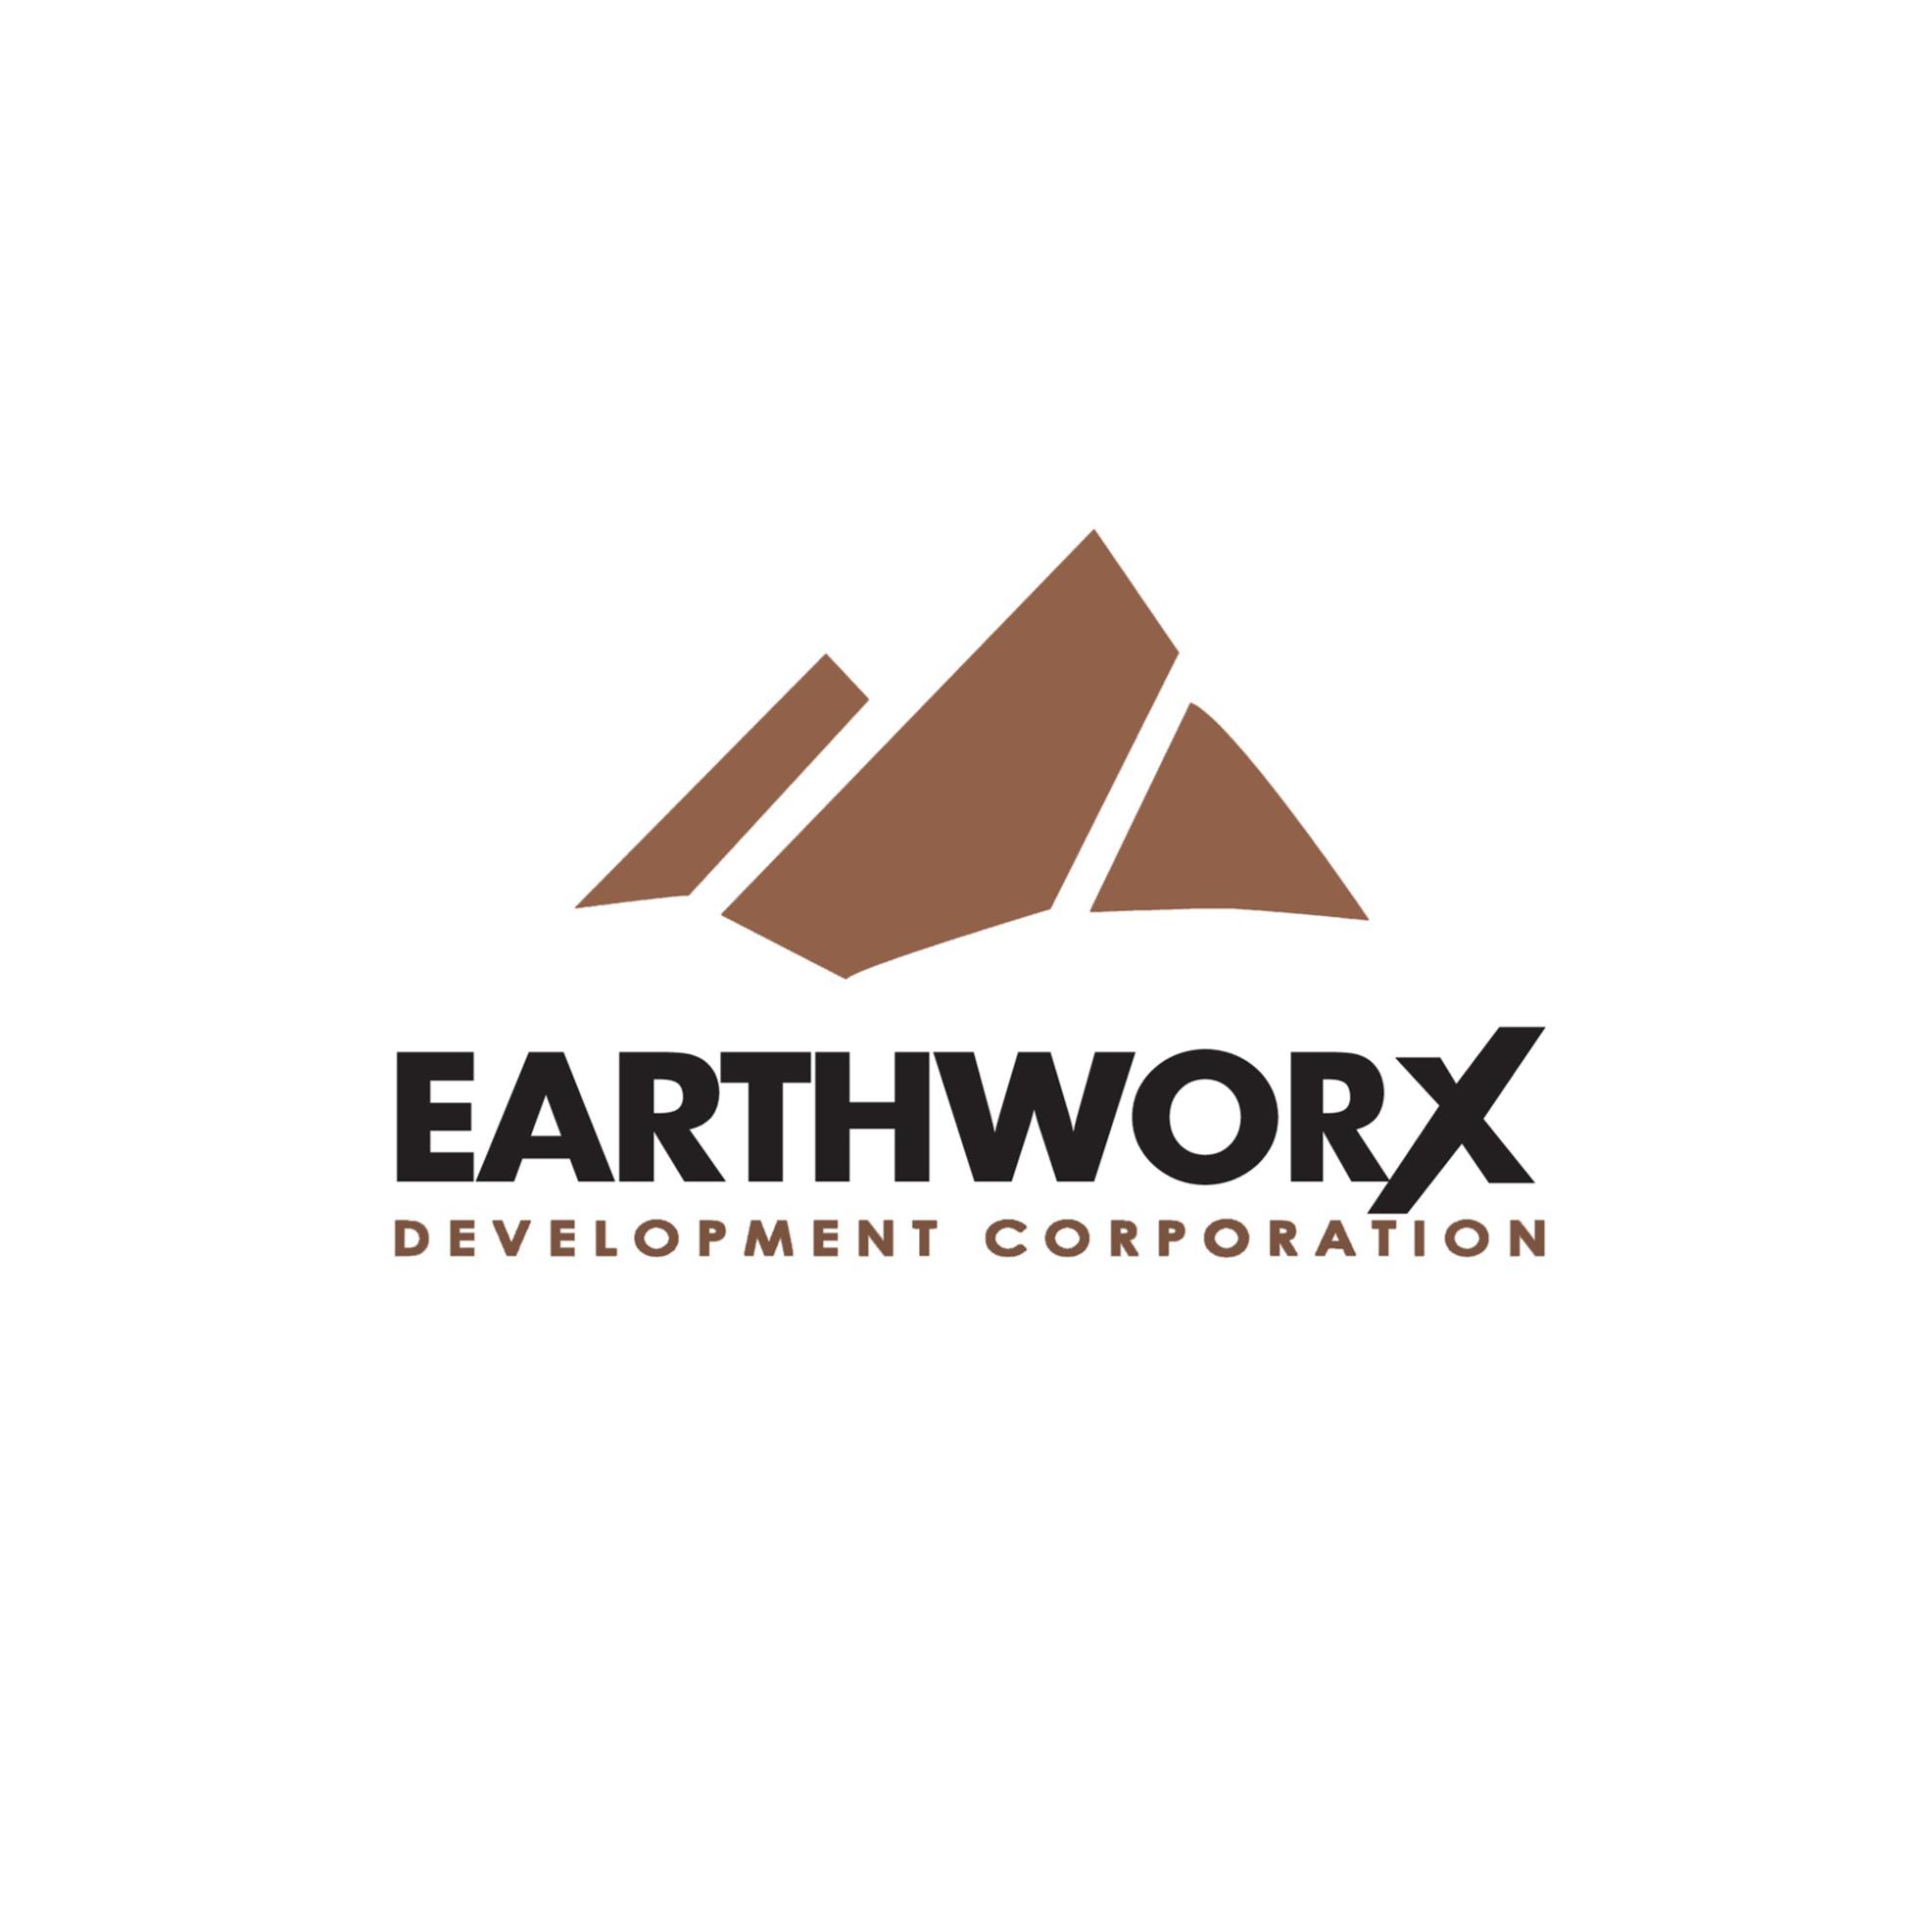 Earthworx Development Corporation